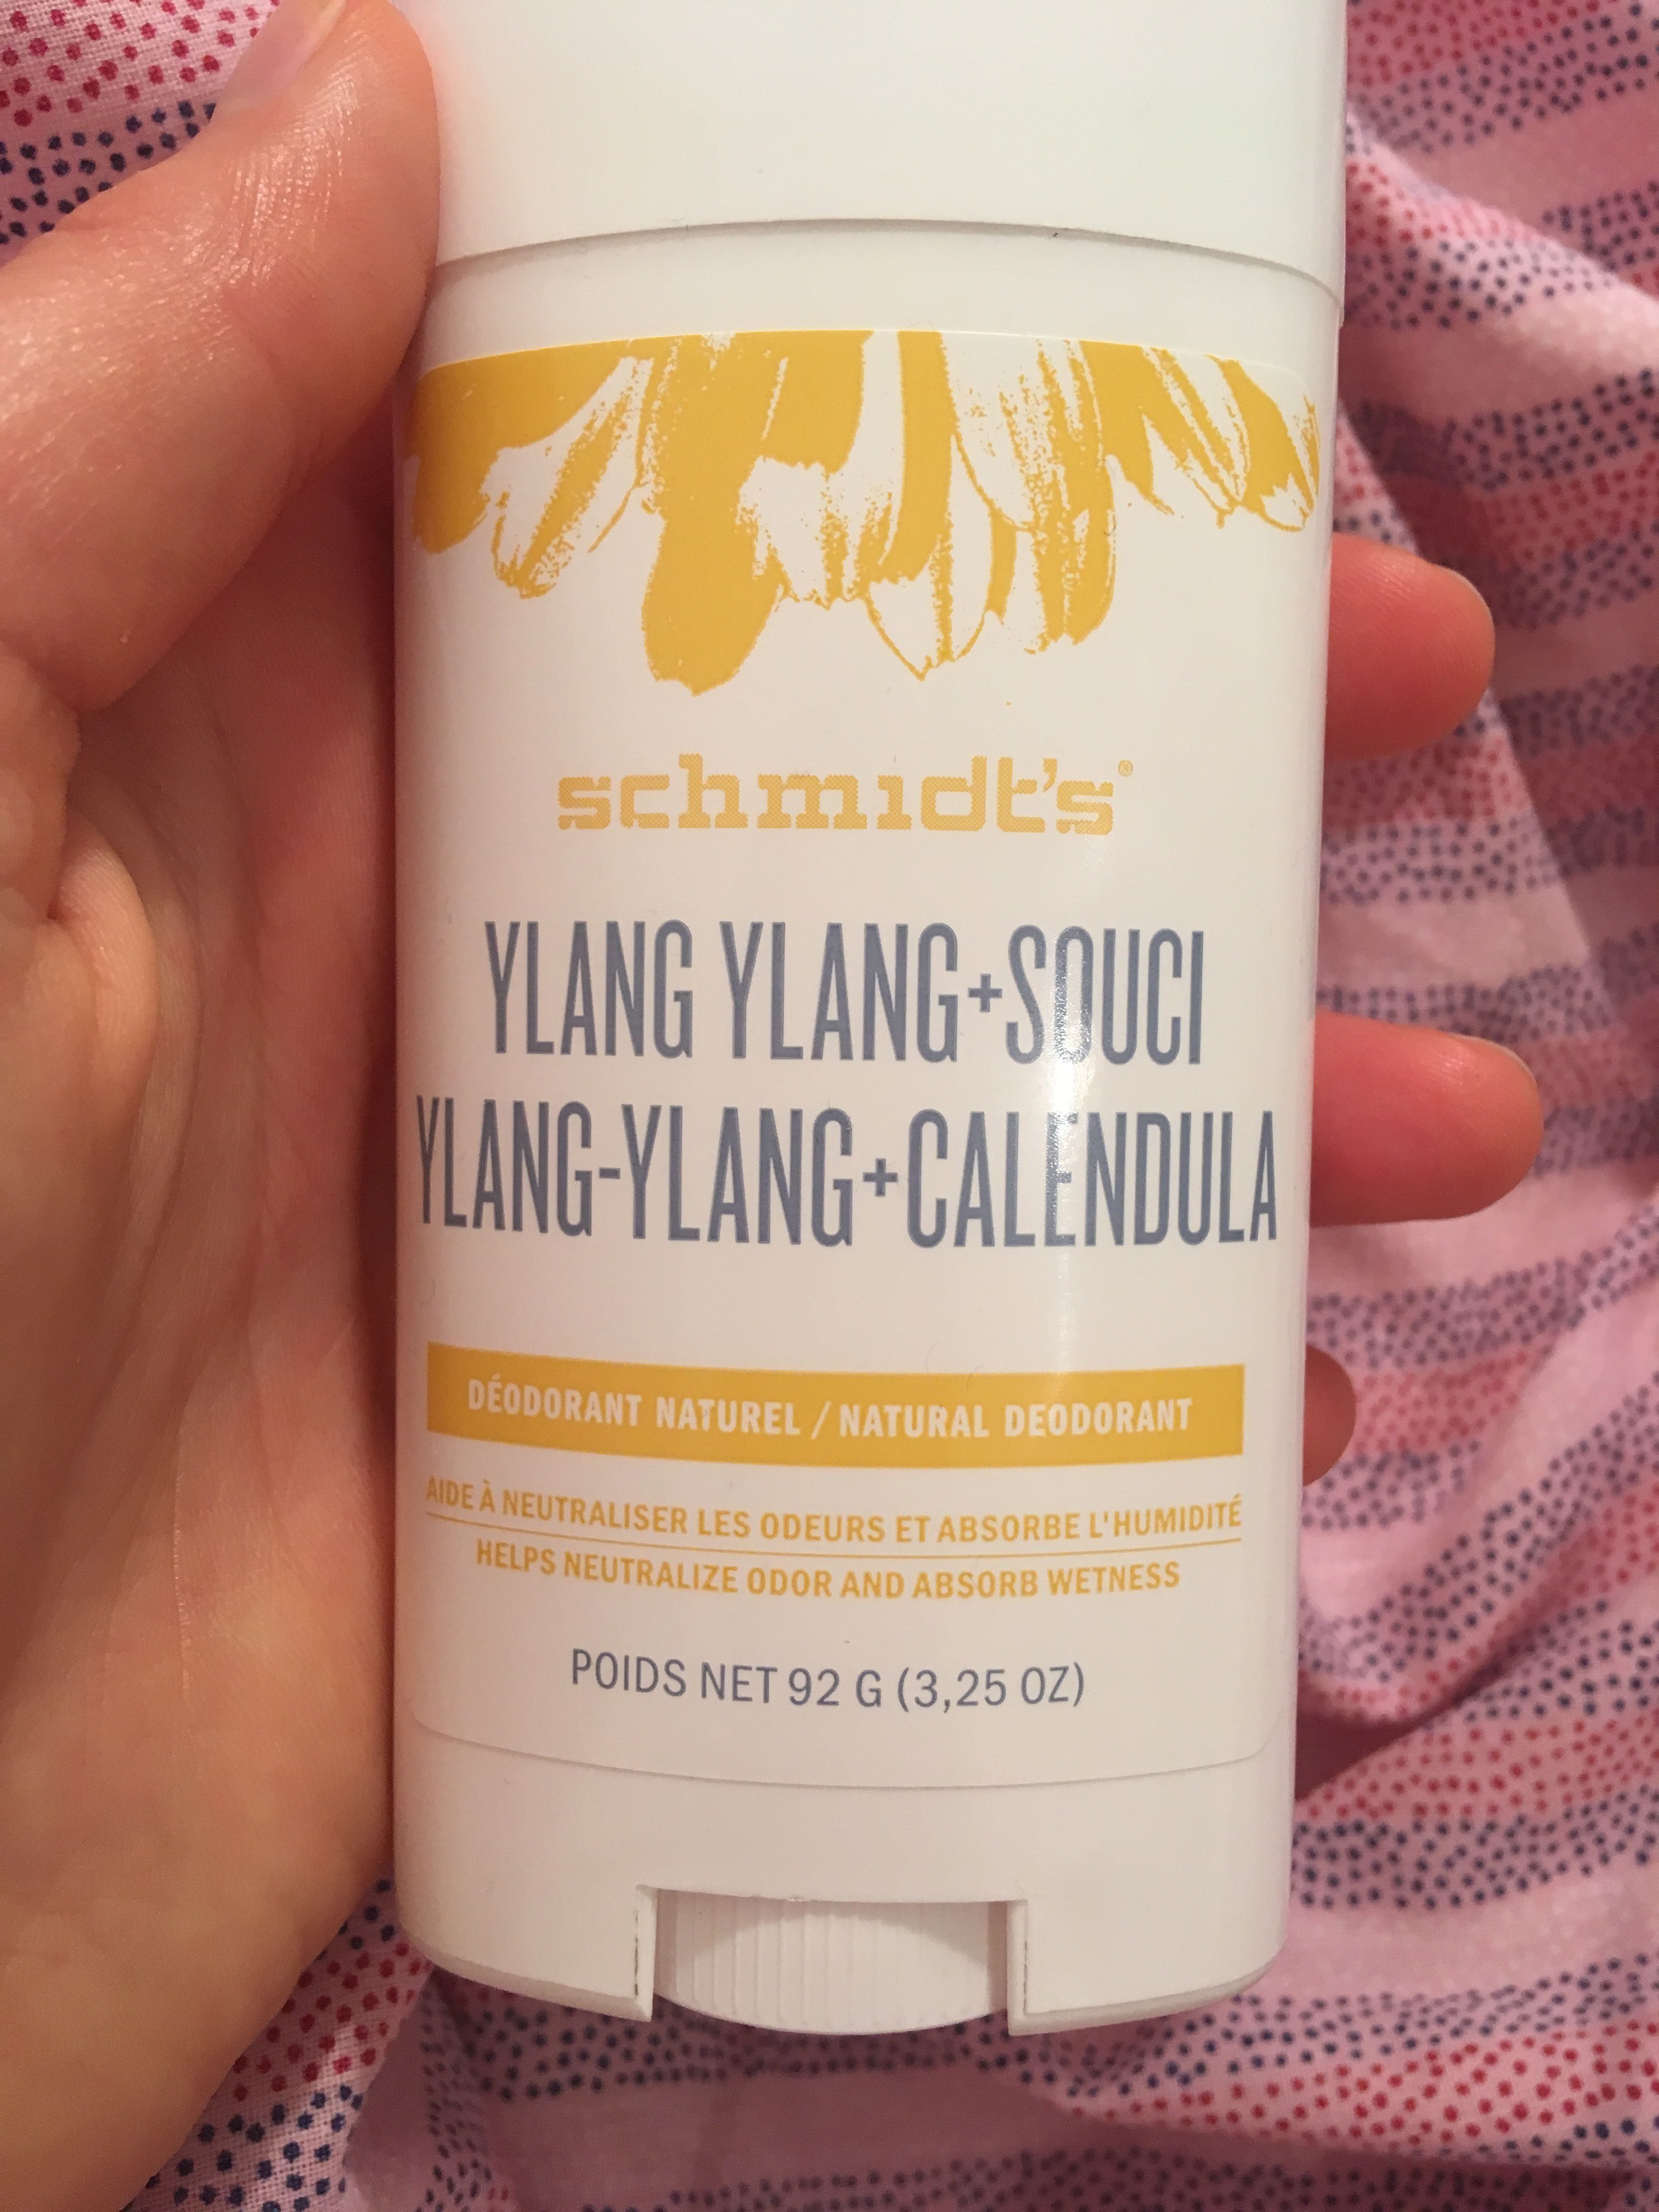 Ylang-Ylang + Calendula Deodorant naturel - Produkt - fr